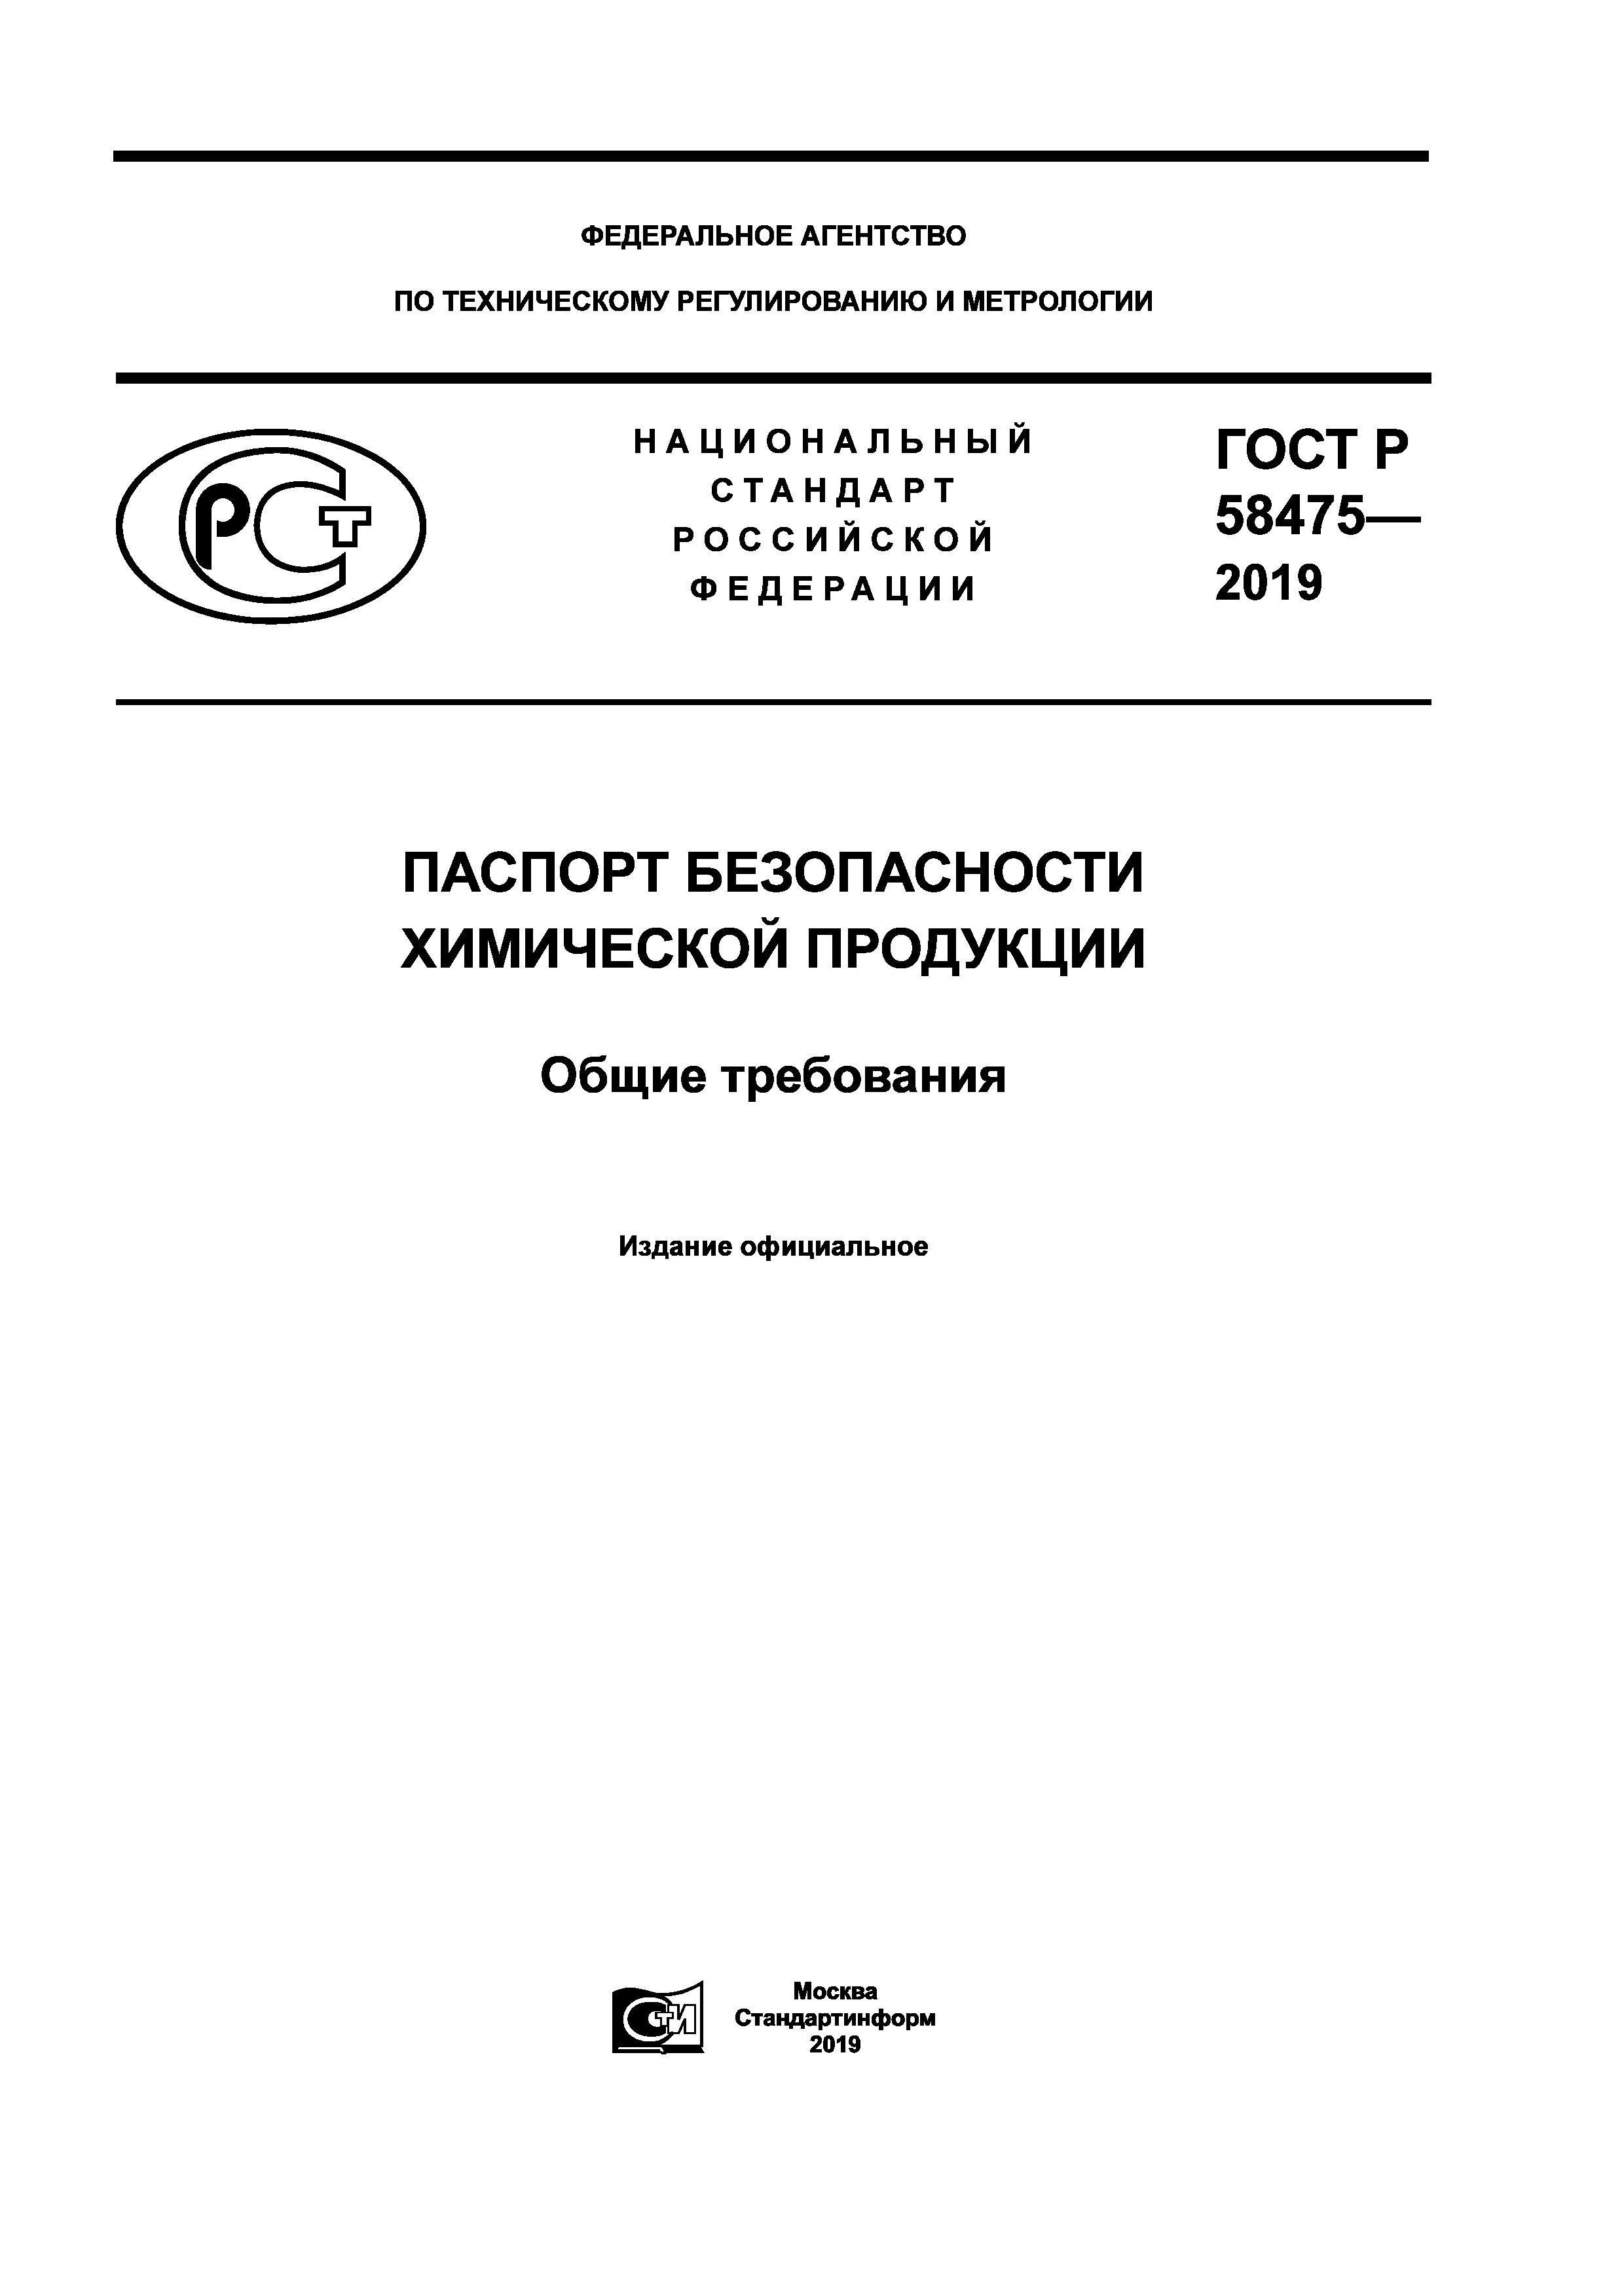 ГОСТ Р 58475-2019